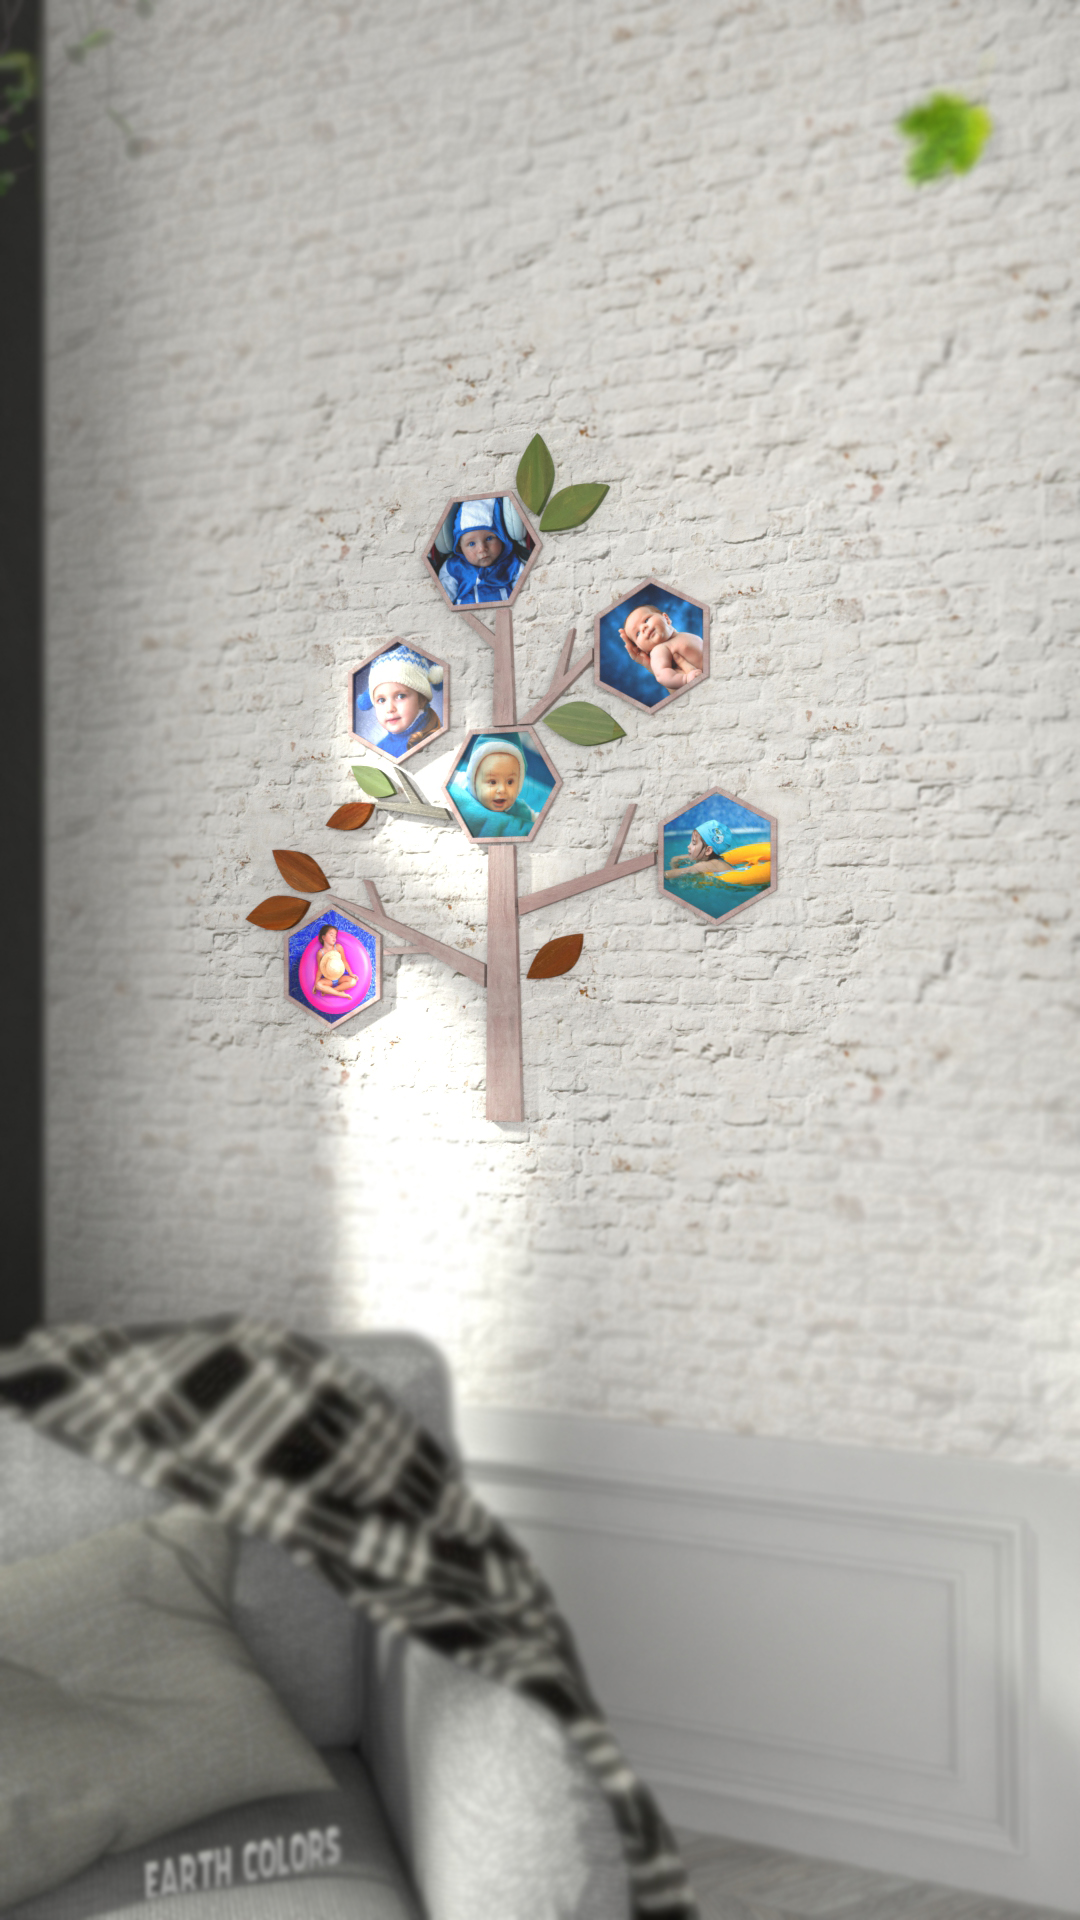 Enjoy never-ending pattern of wall art tree of life